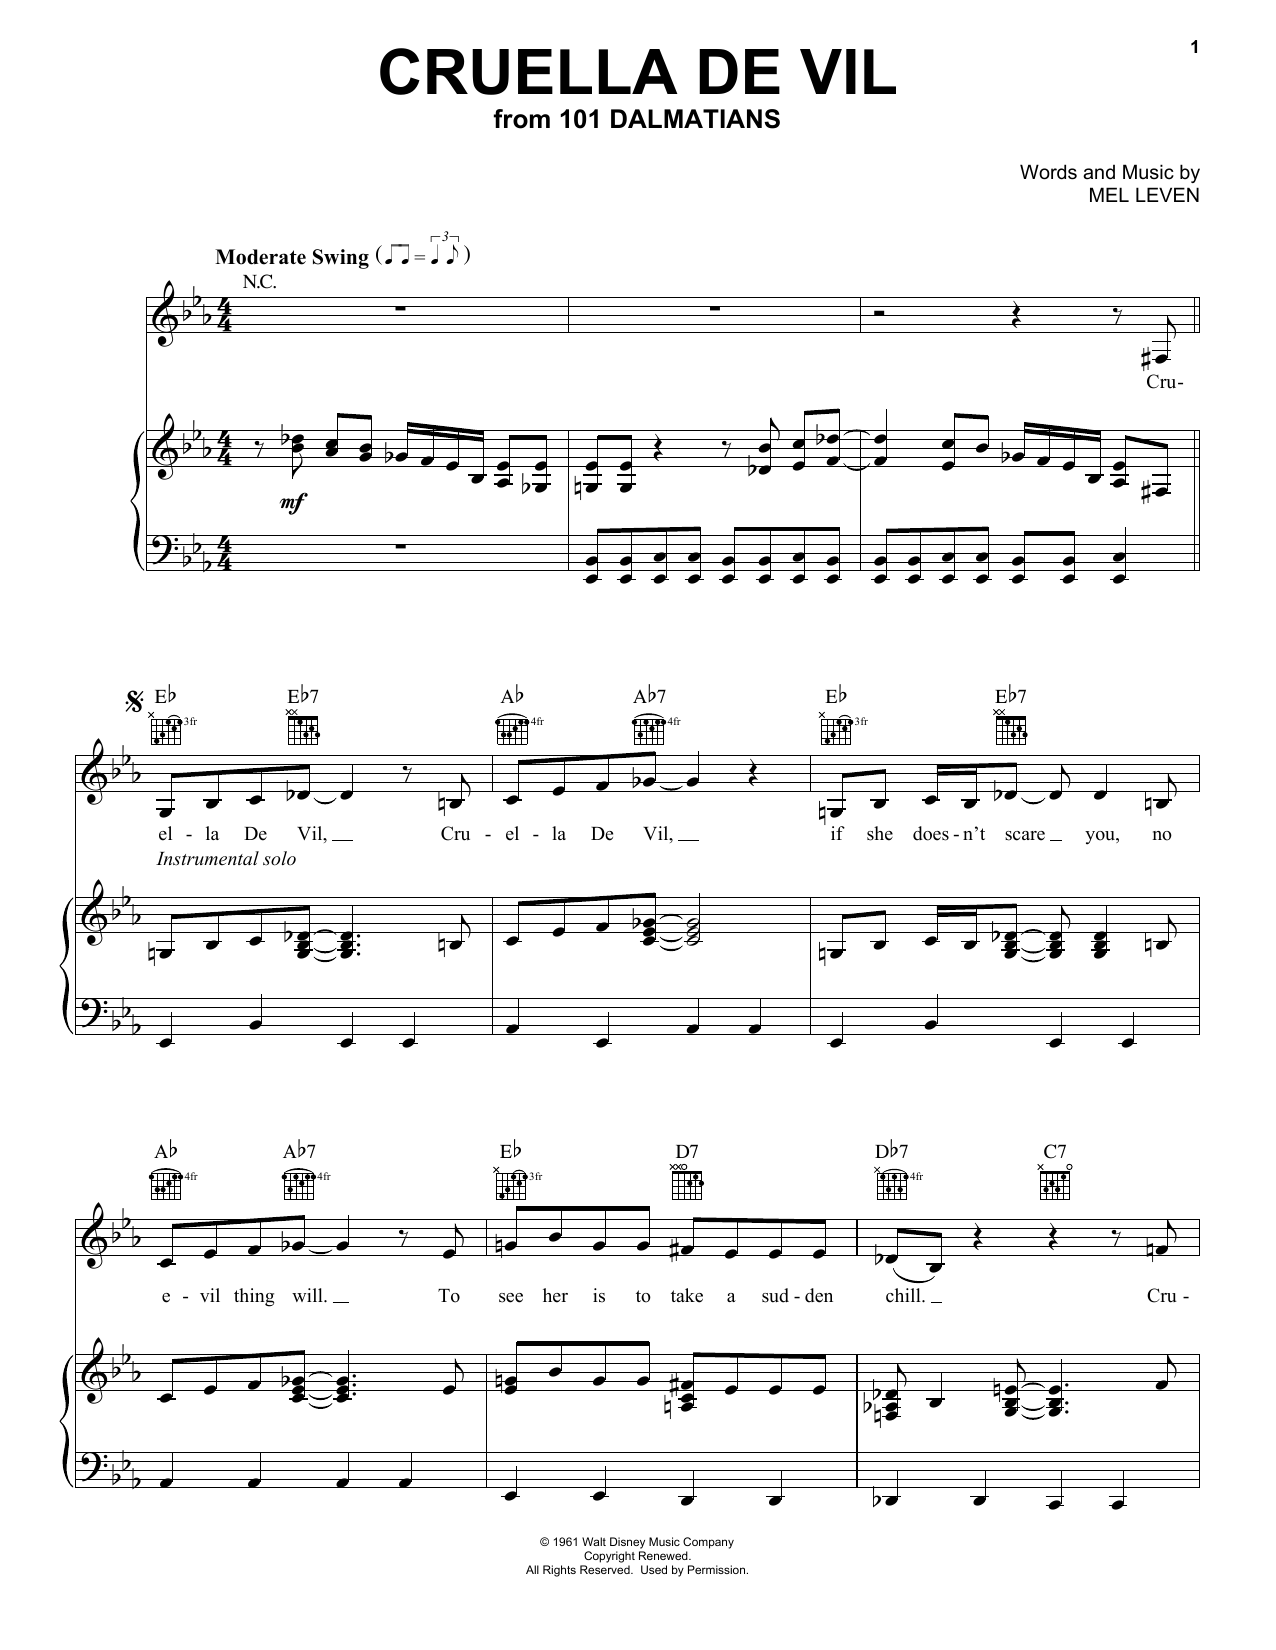 Download Mel Leven Cruella De Vil Sheet Music and learn how to play Tenor Saxophone PDF digital score in minutes